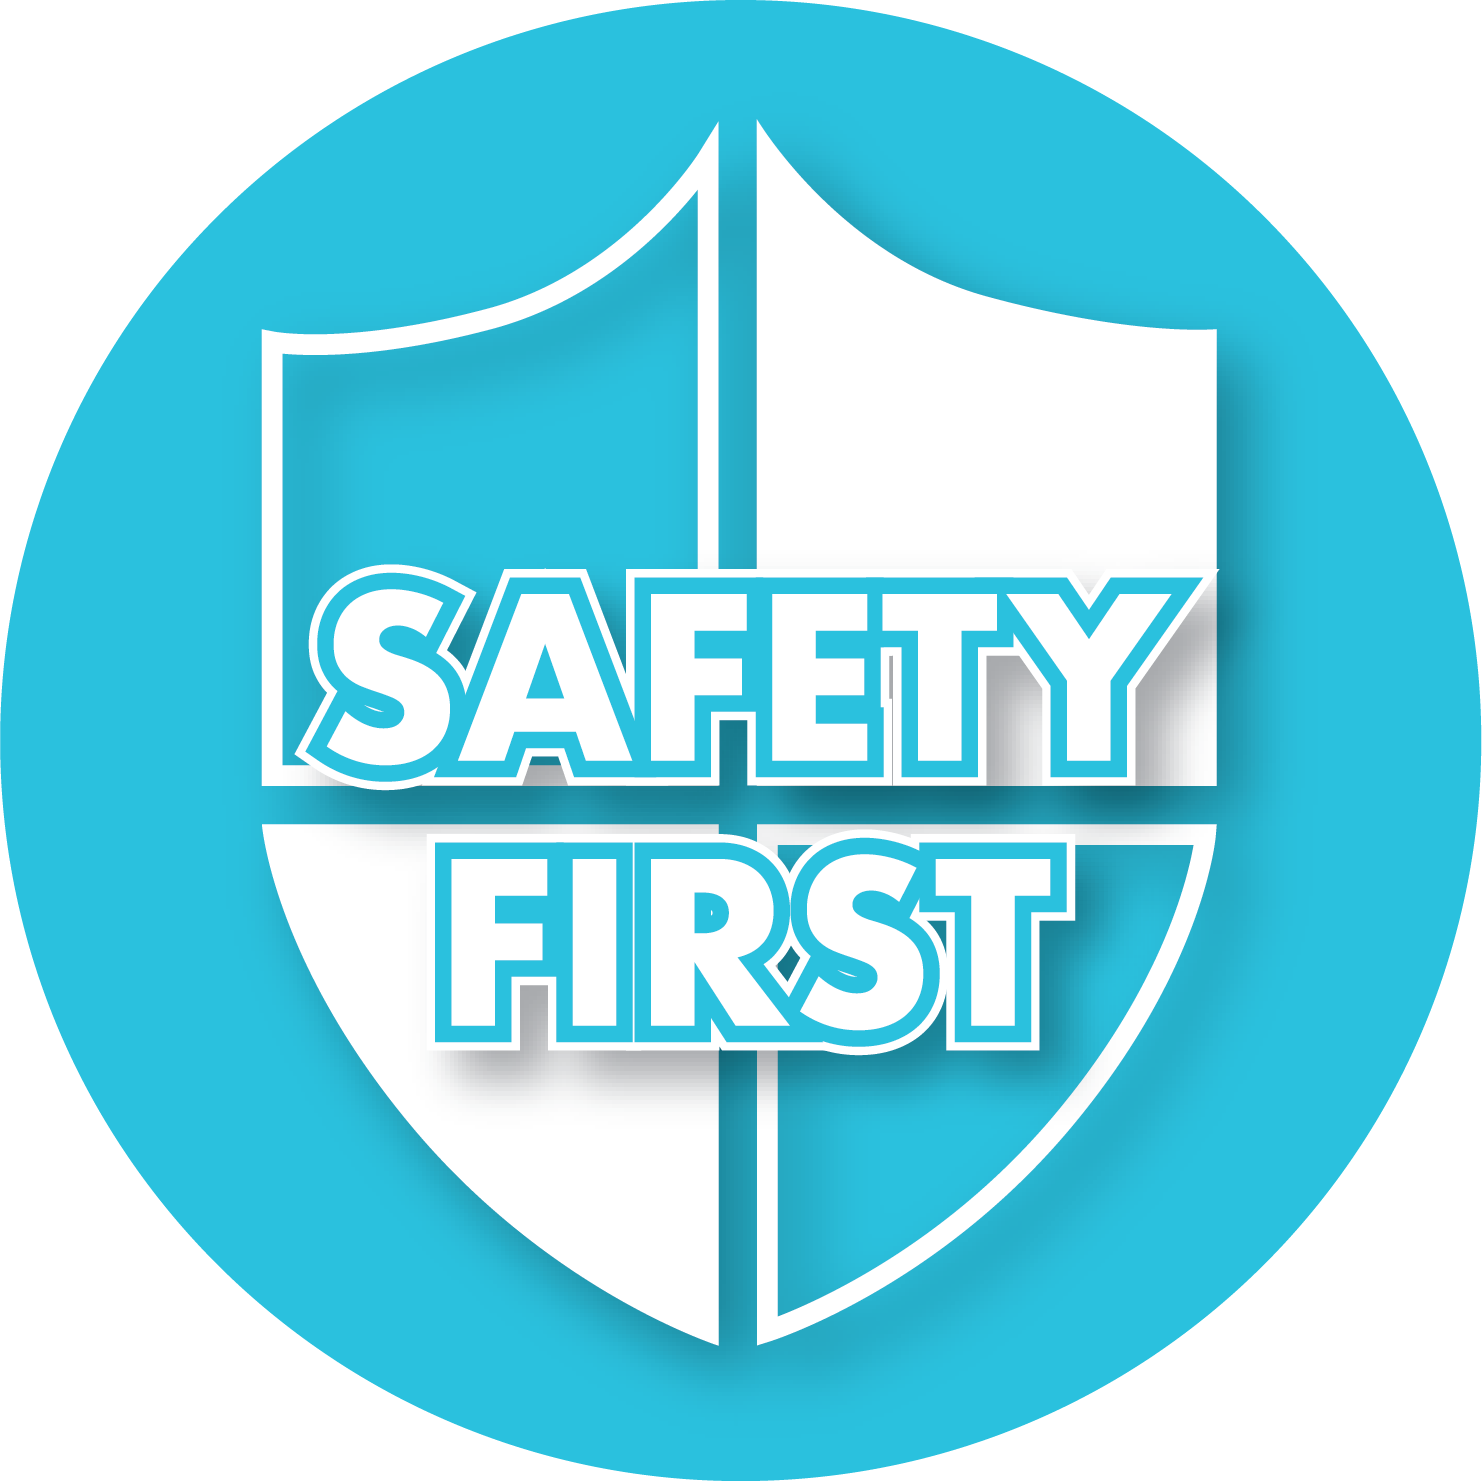 safety-first